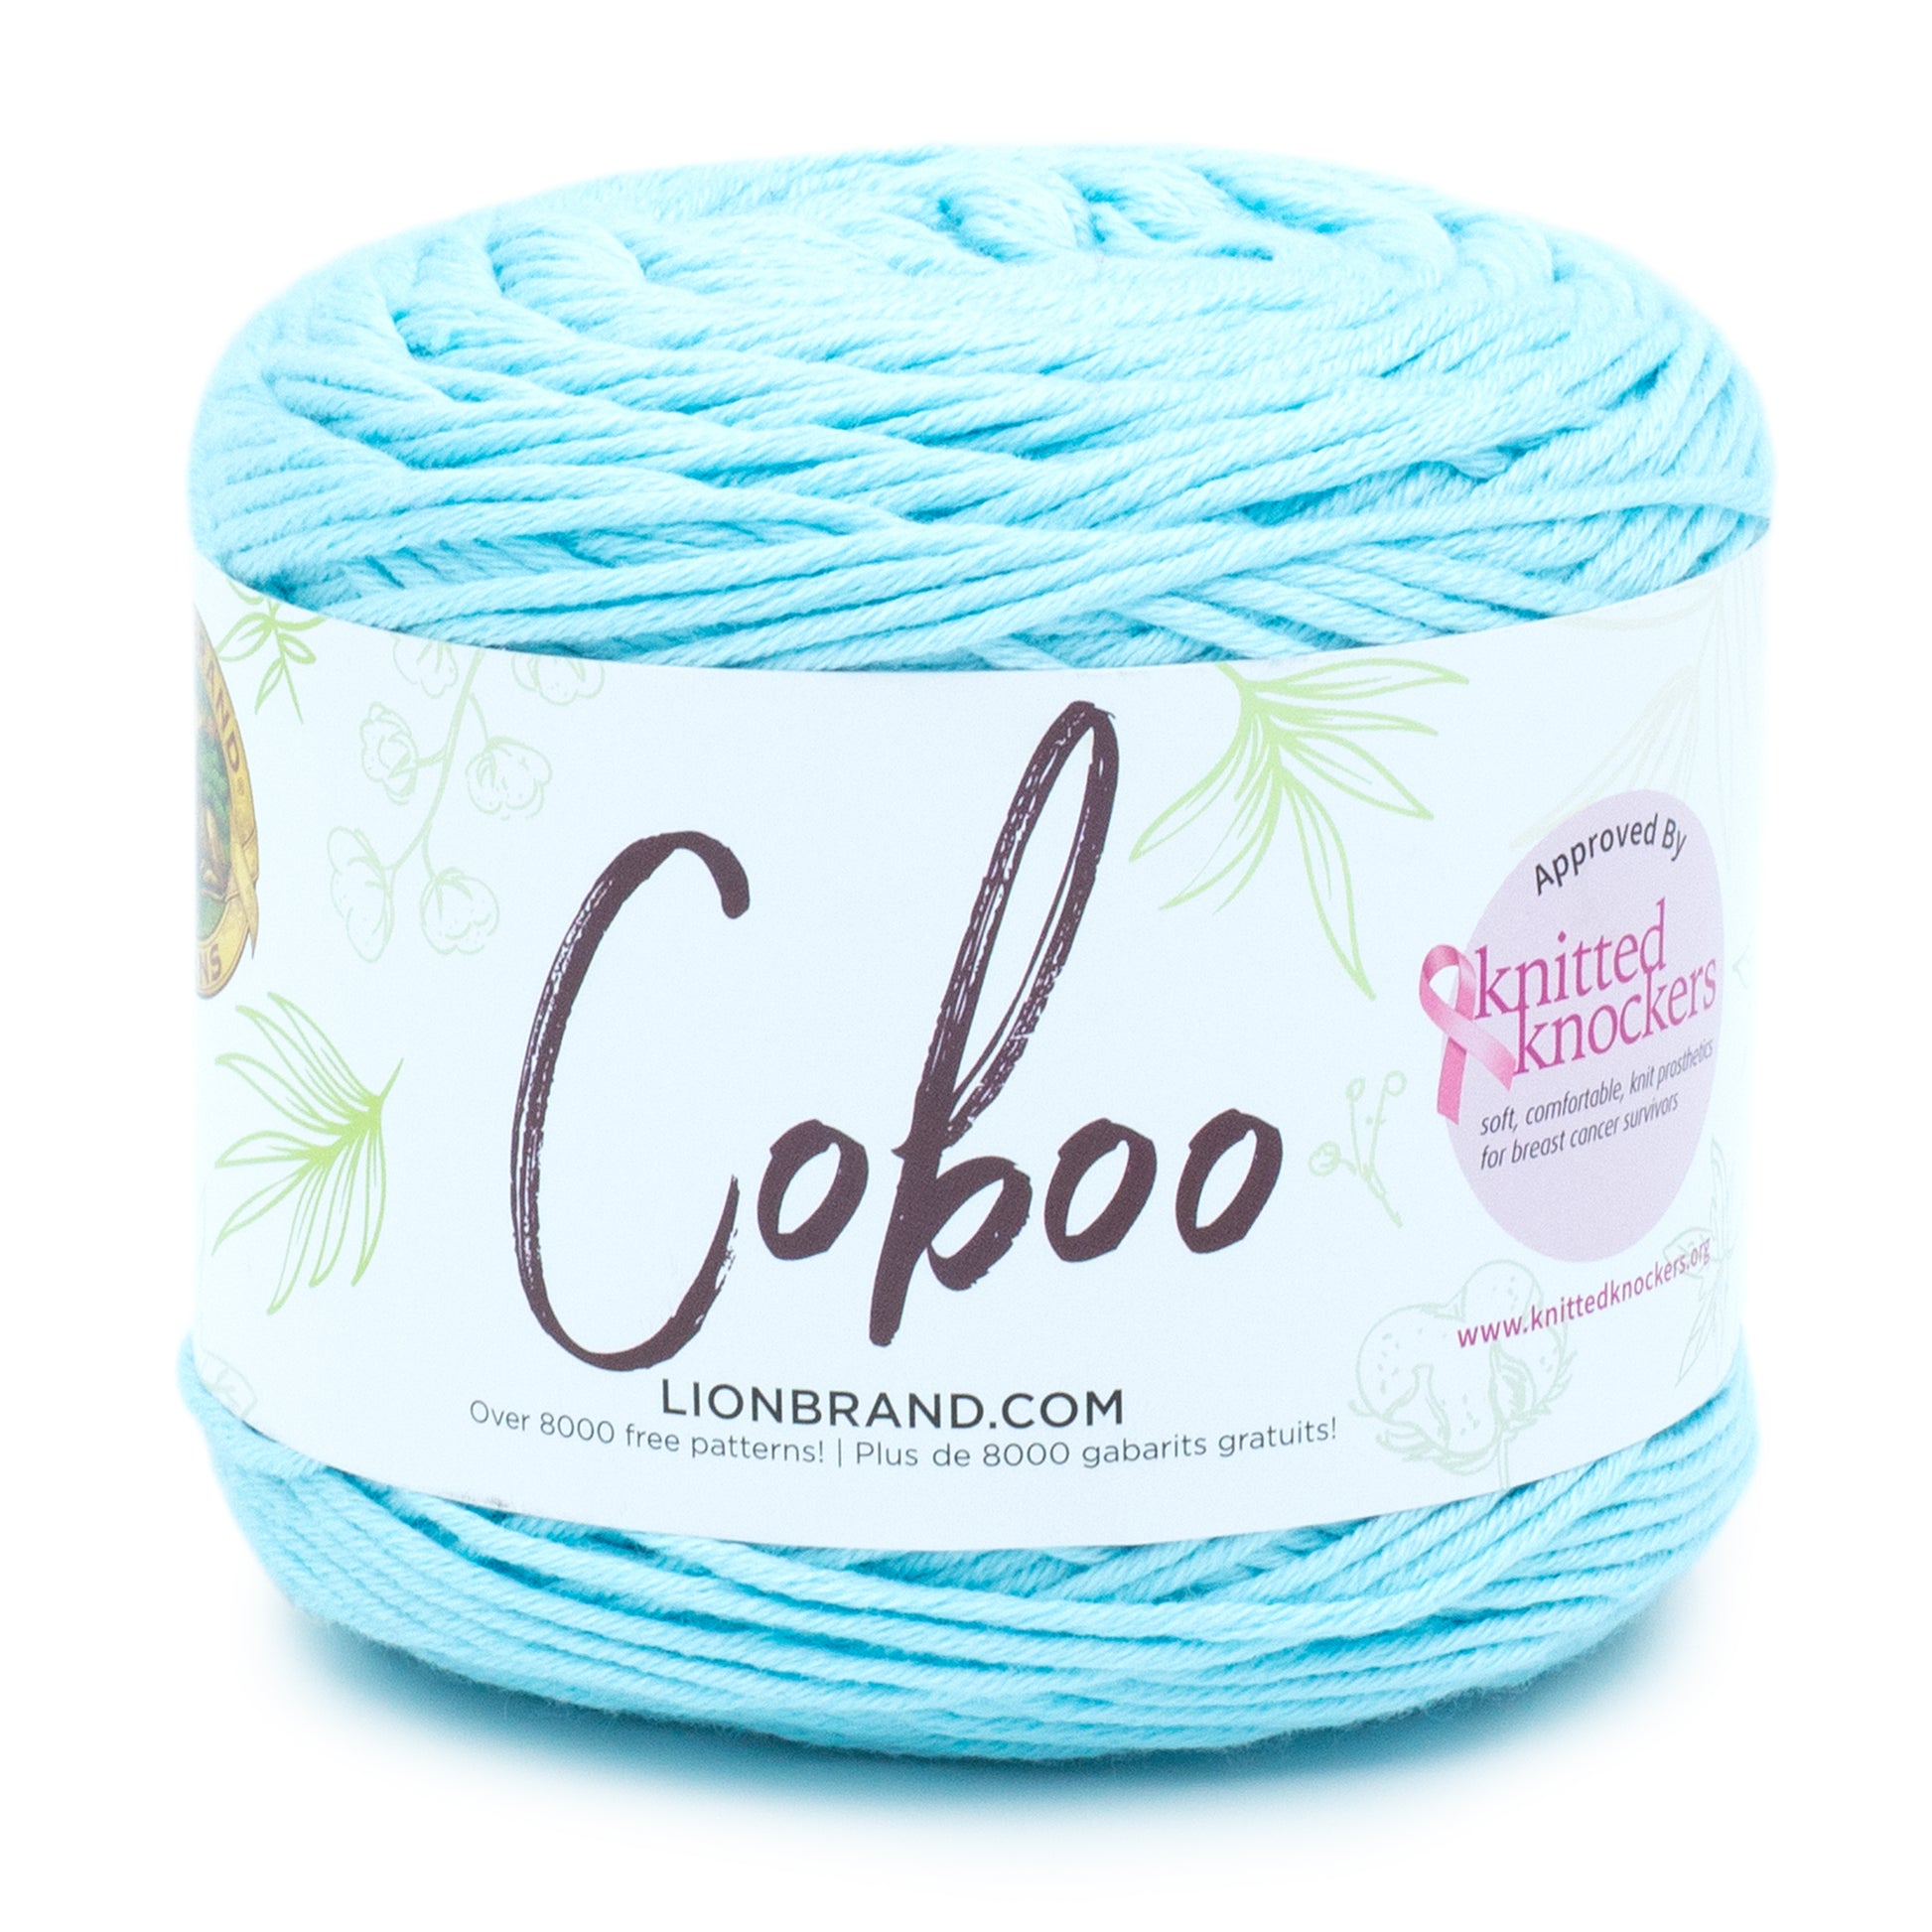 Coboo – Squidgey Yarn Co.